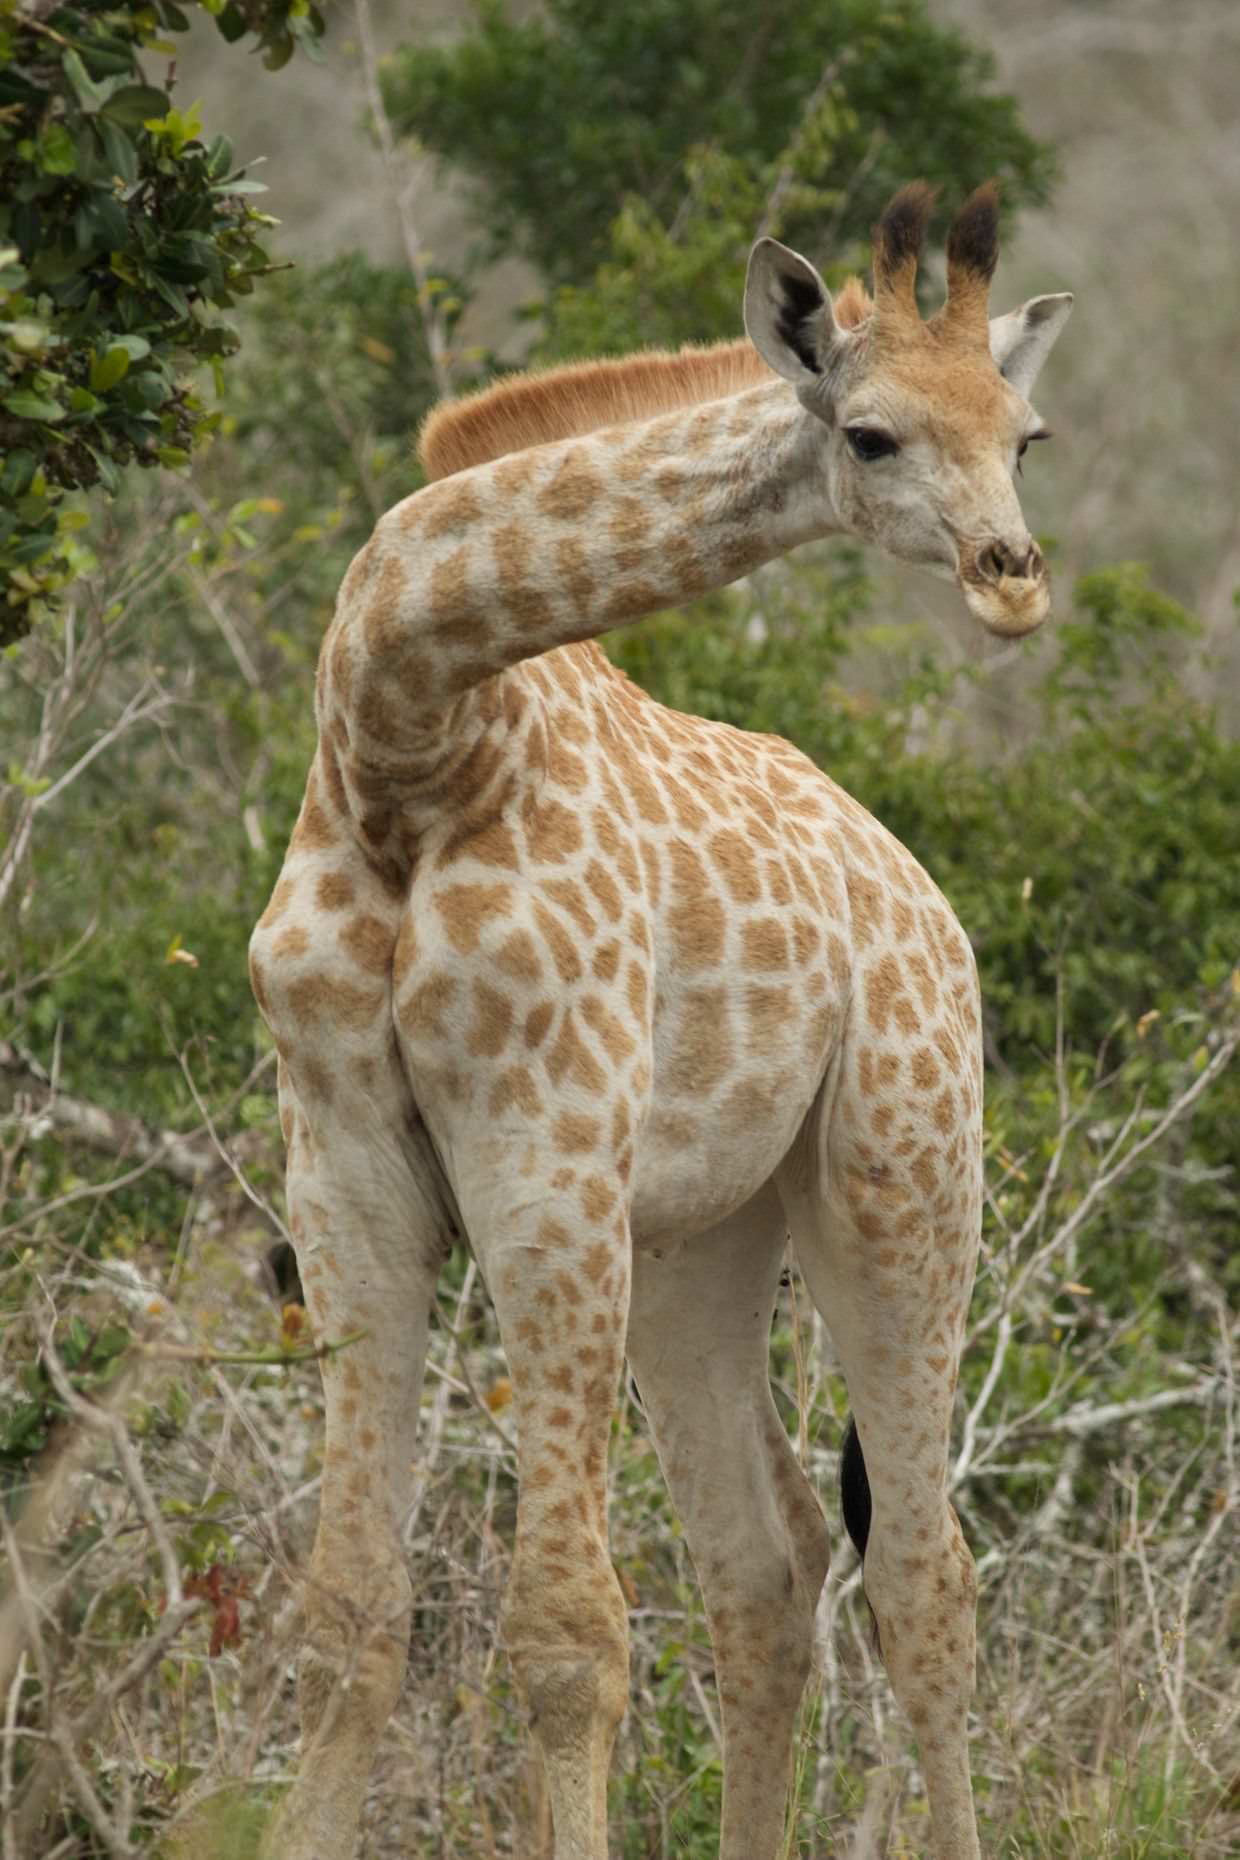 A young giraffe